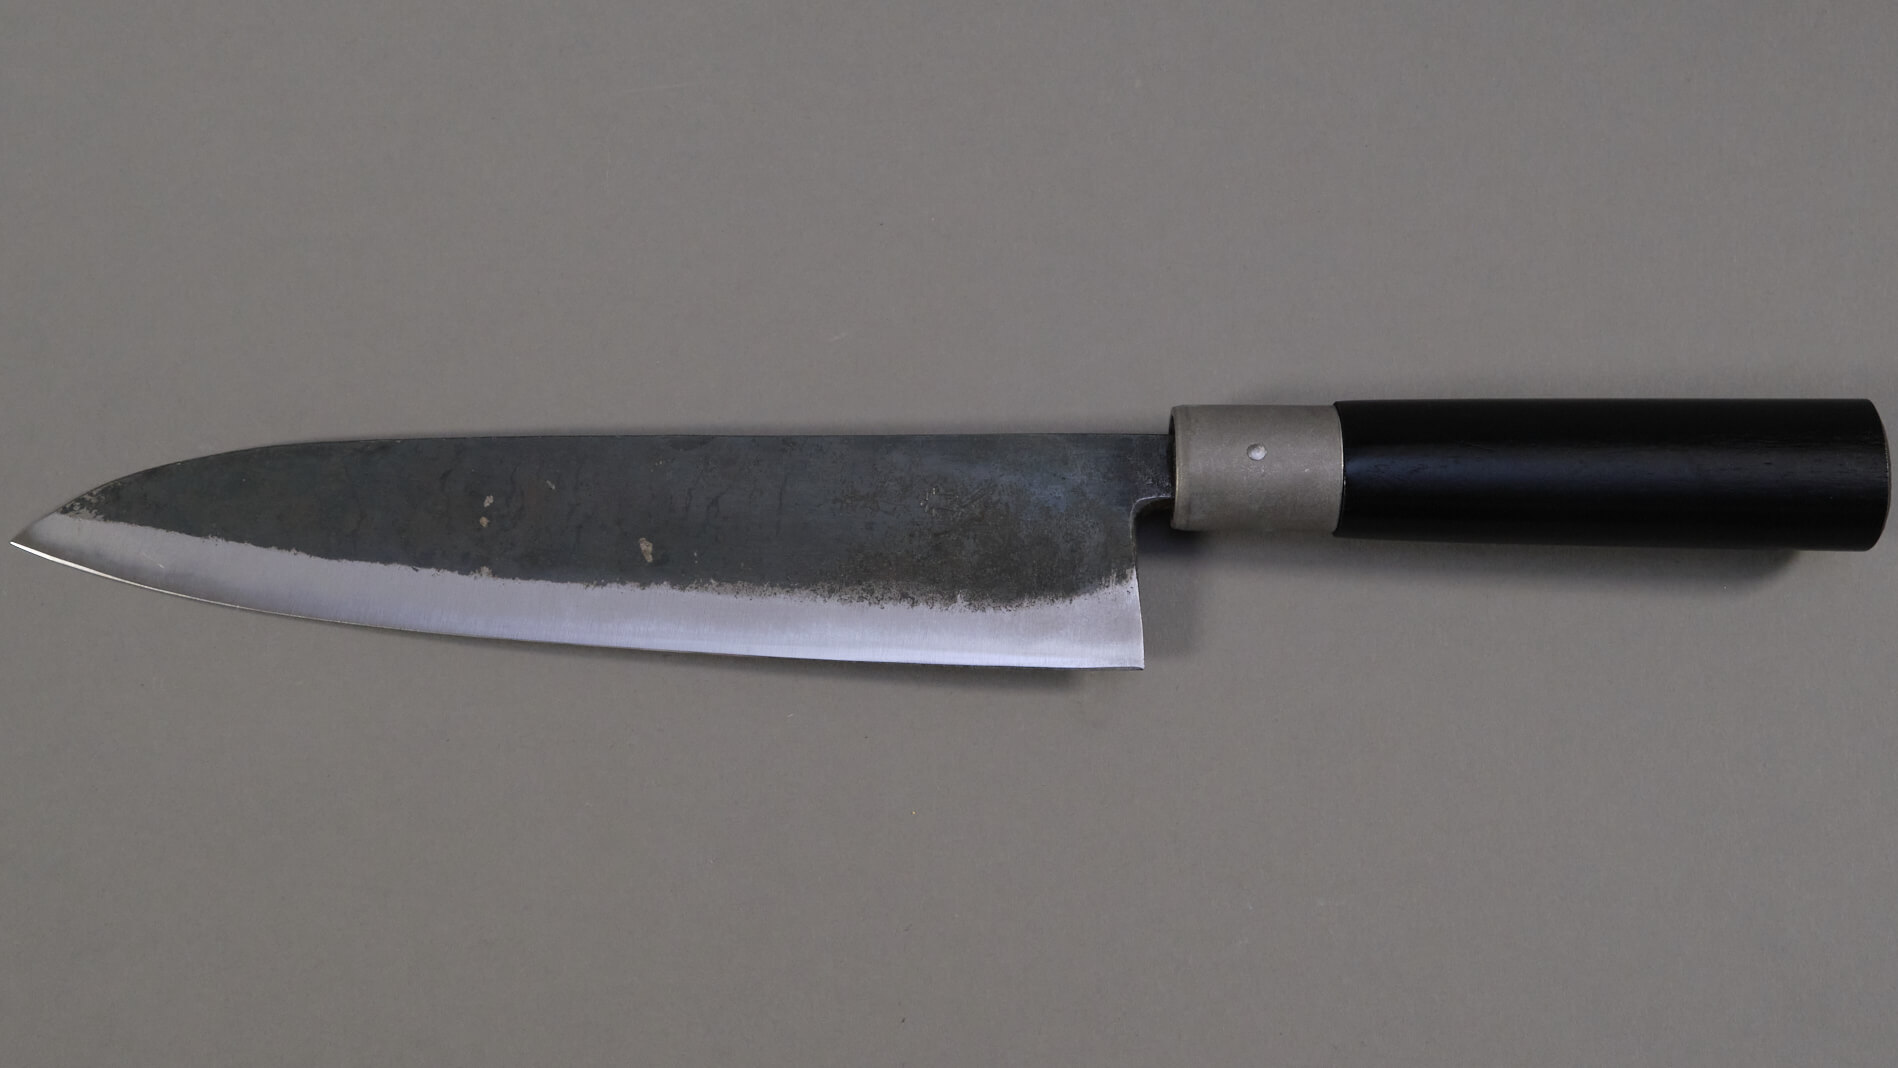 Couteau artisanal Japonais Haiku Kurouchi 21 cm Chef